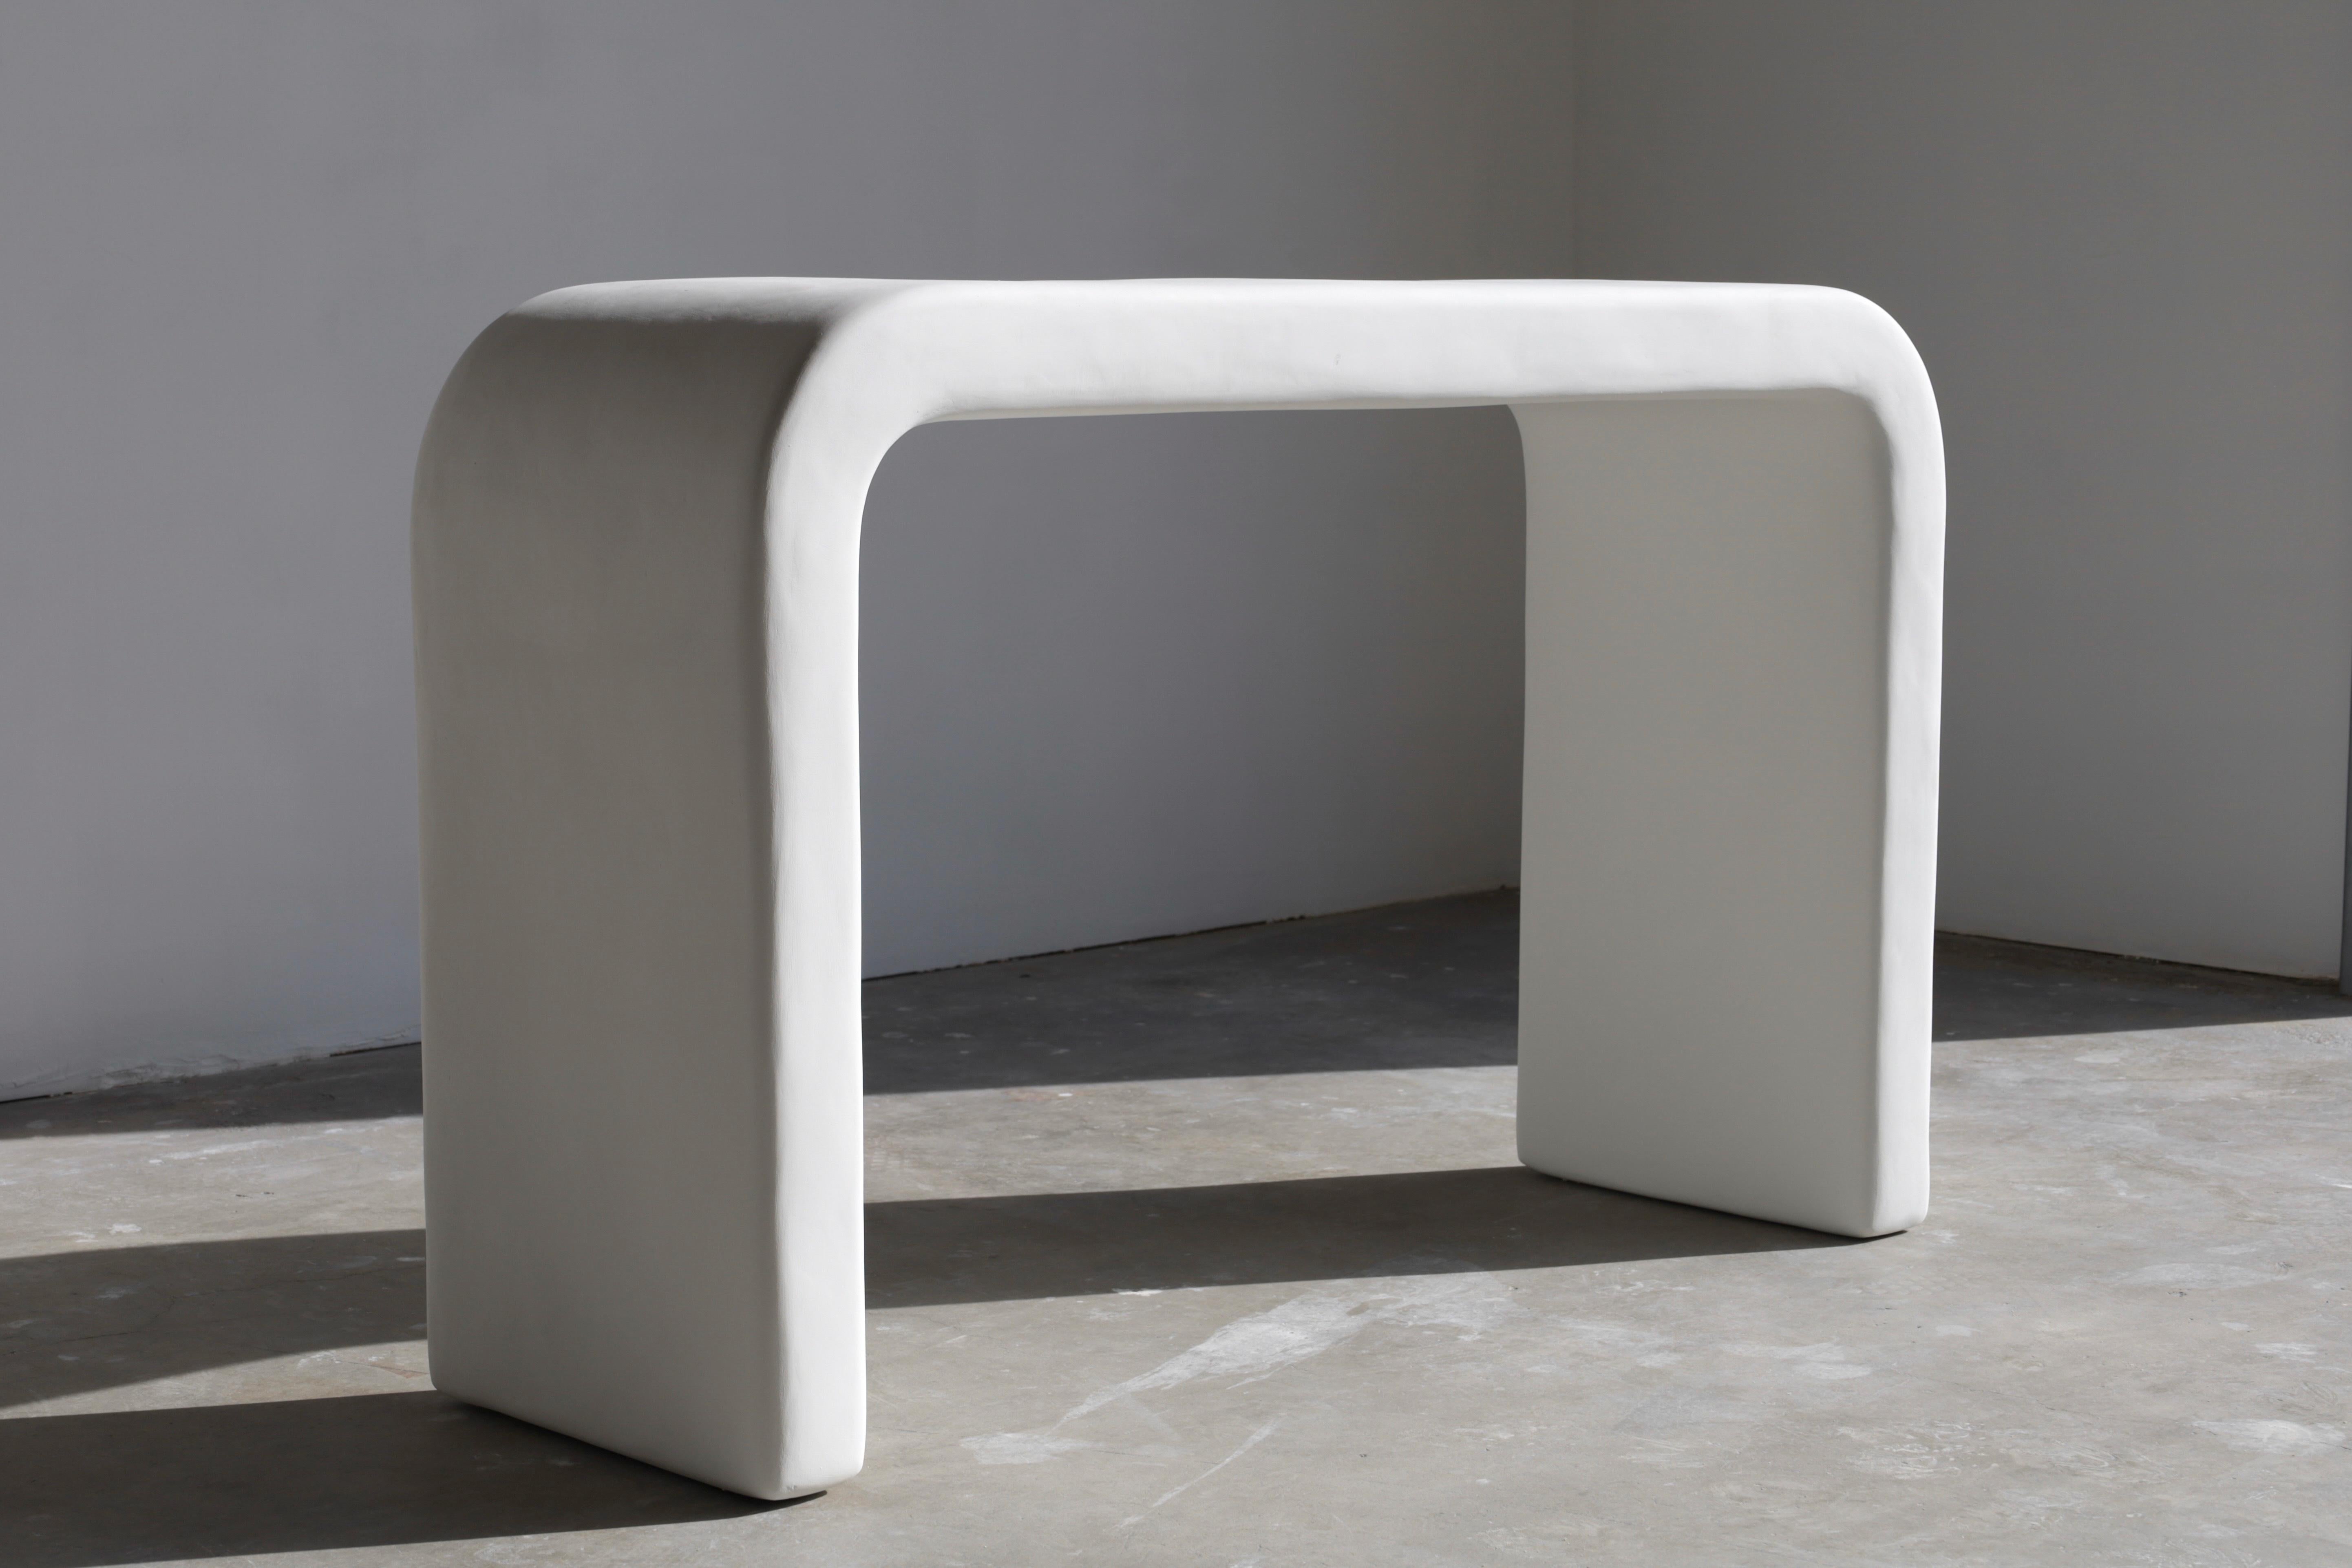 Minimalist marit minimalist plaster waterfall console in salt by öken house studios For Sale